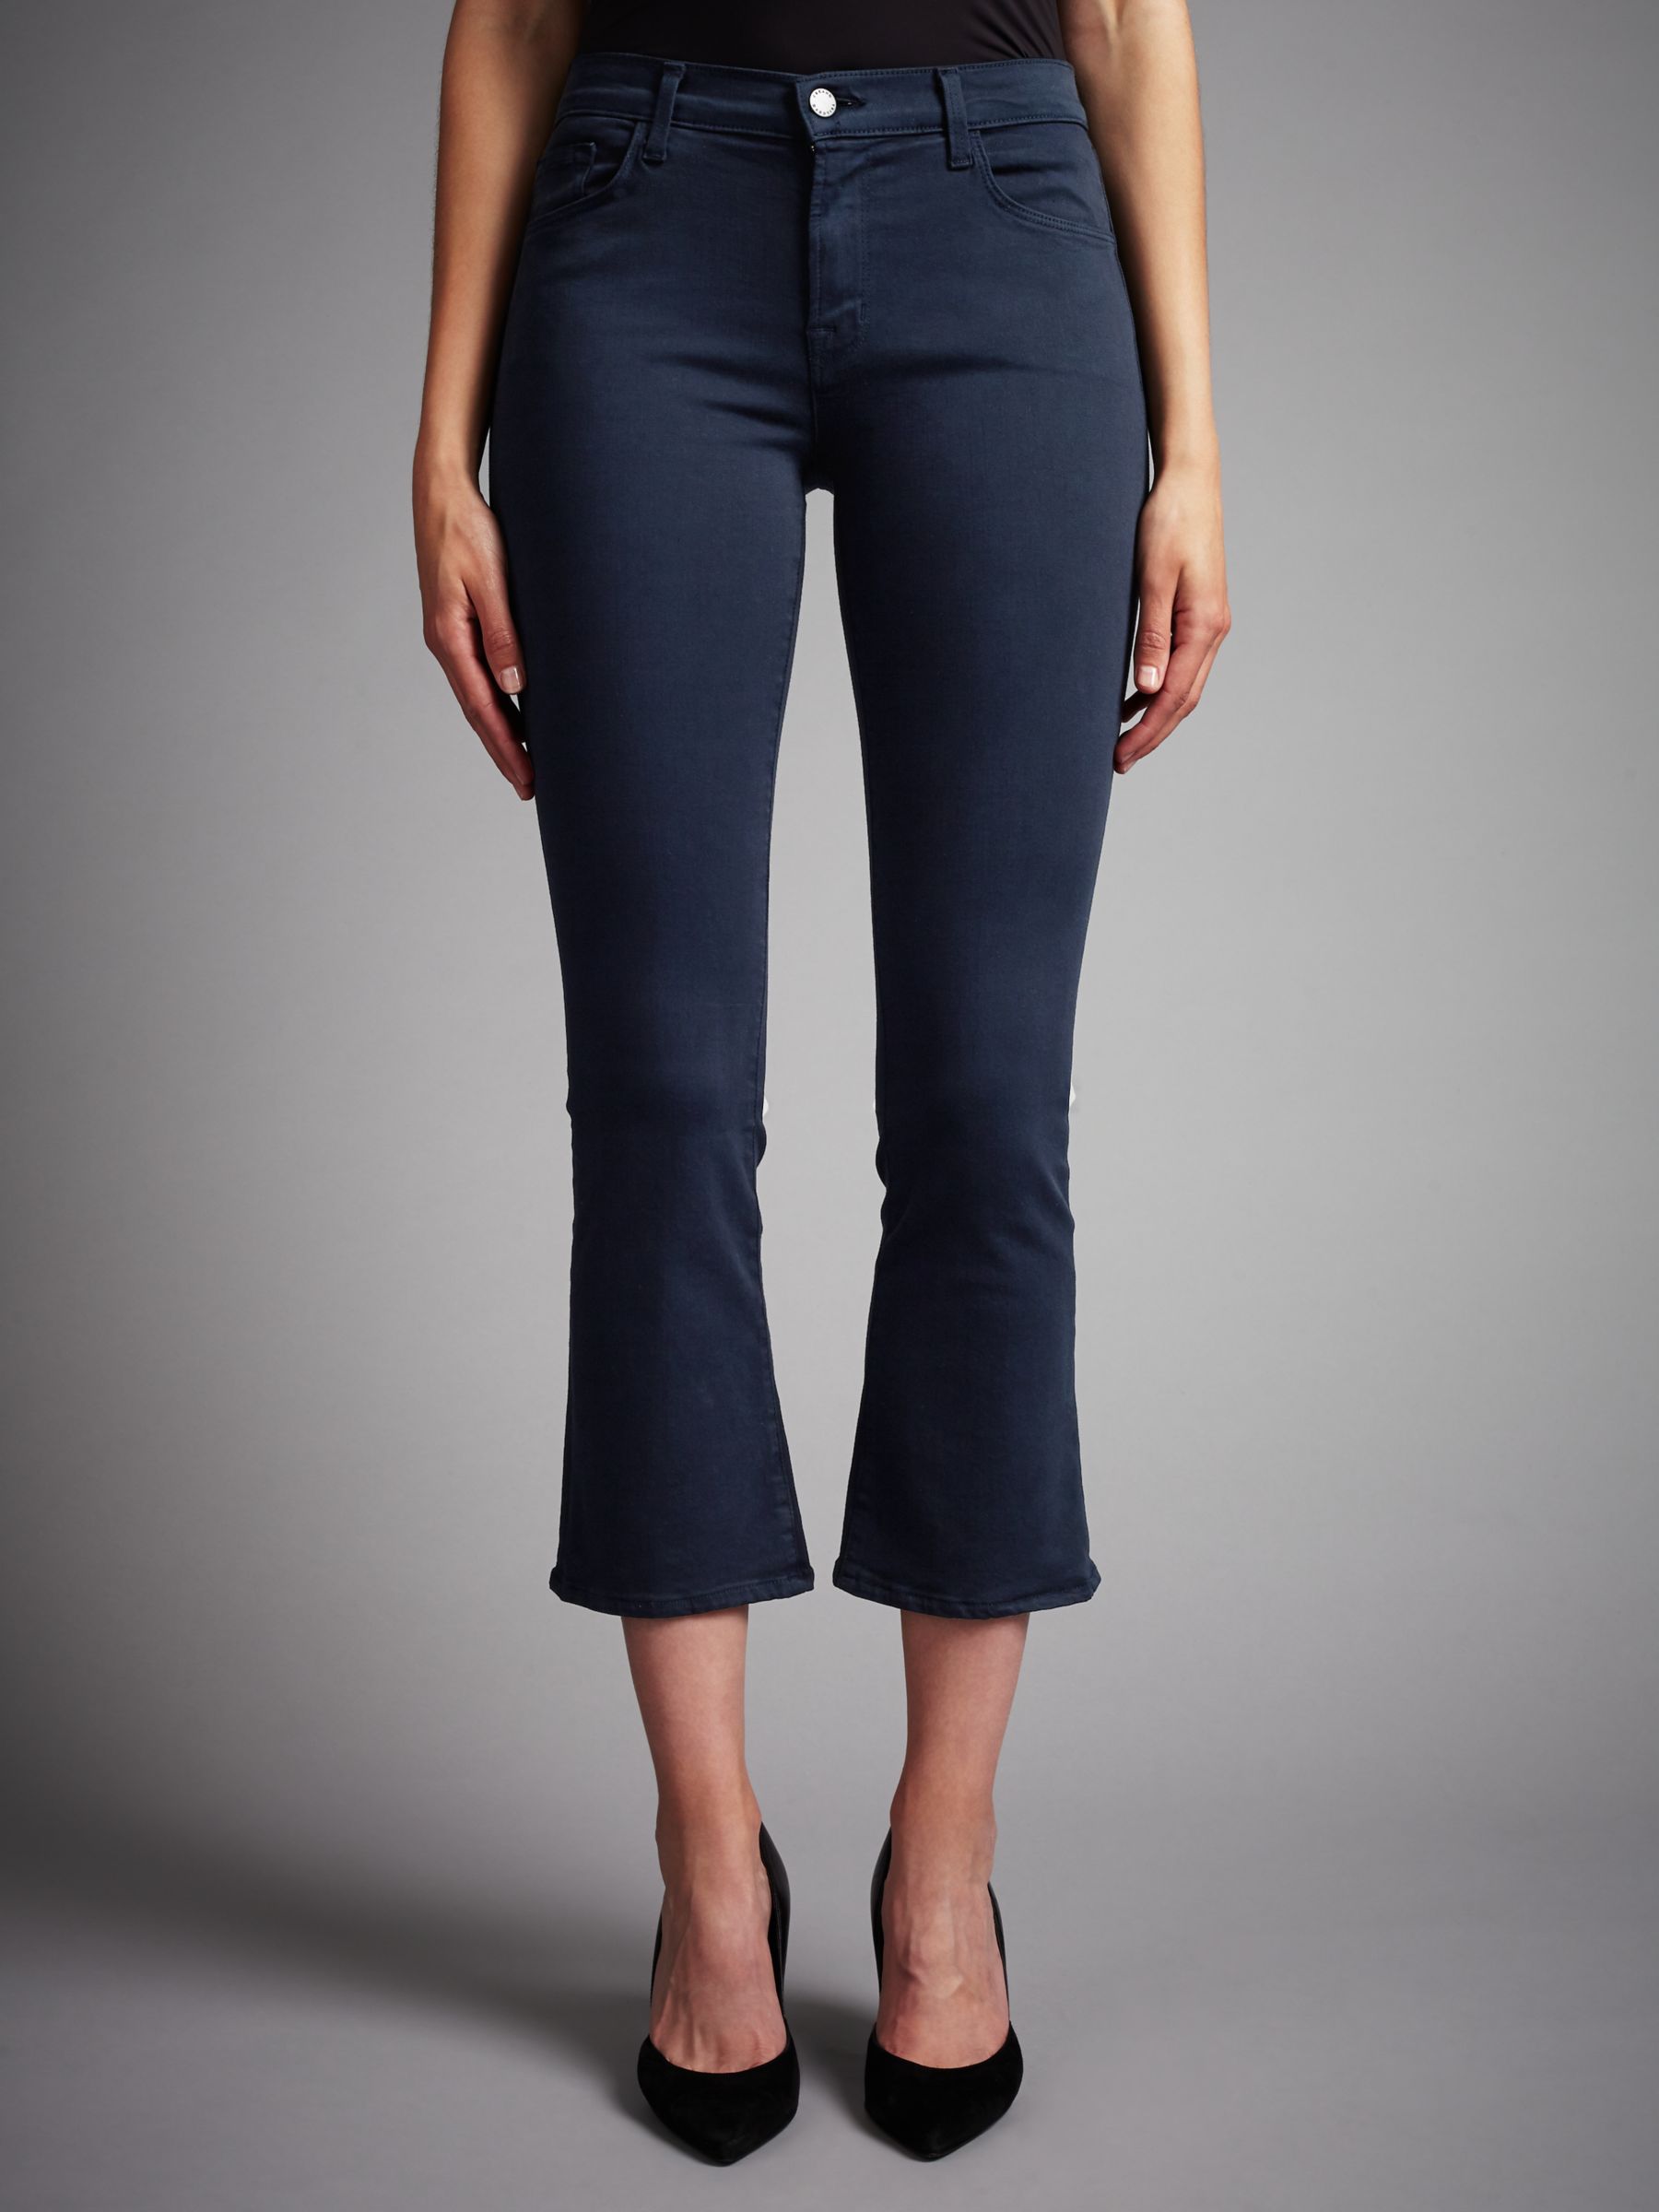 J Brand Jeans Size 27 Womens J Brand Mid Rise Skinny Leg Jeans